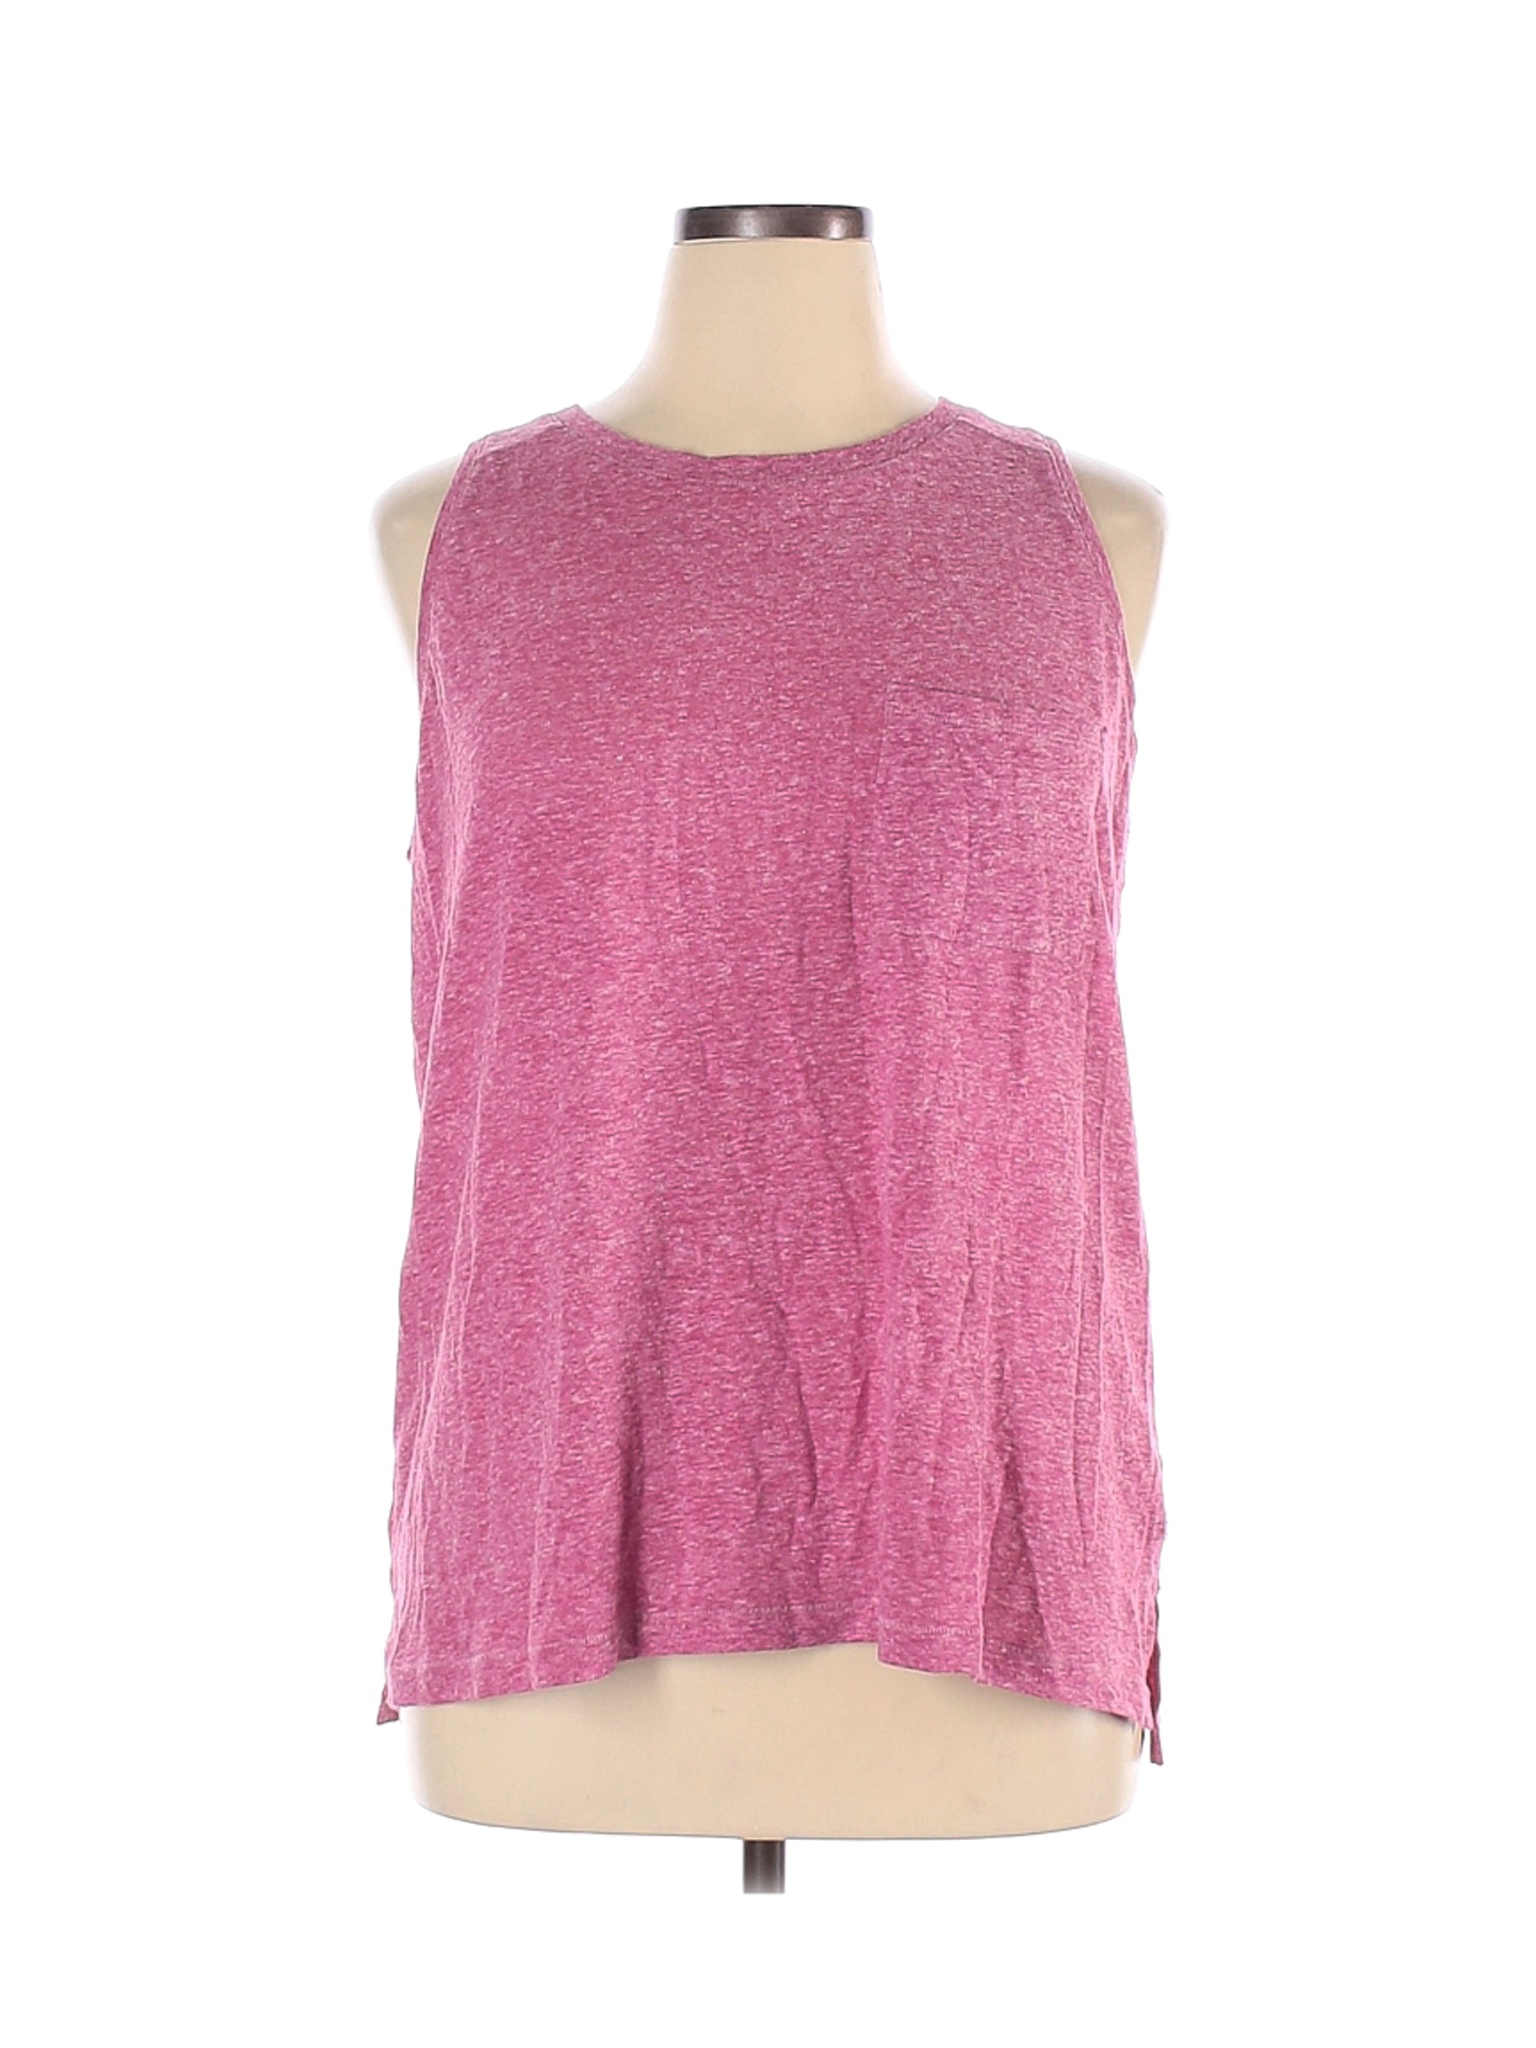 Old Navy Women Pink Sleeveless T-Shirt XL | eBay